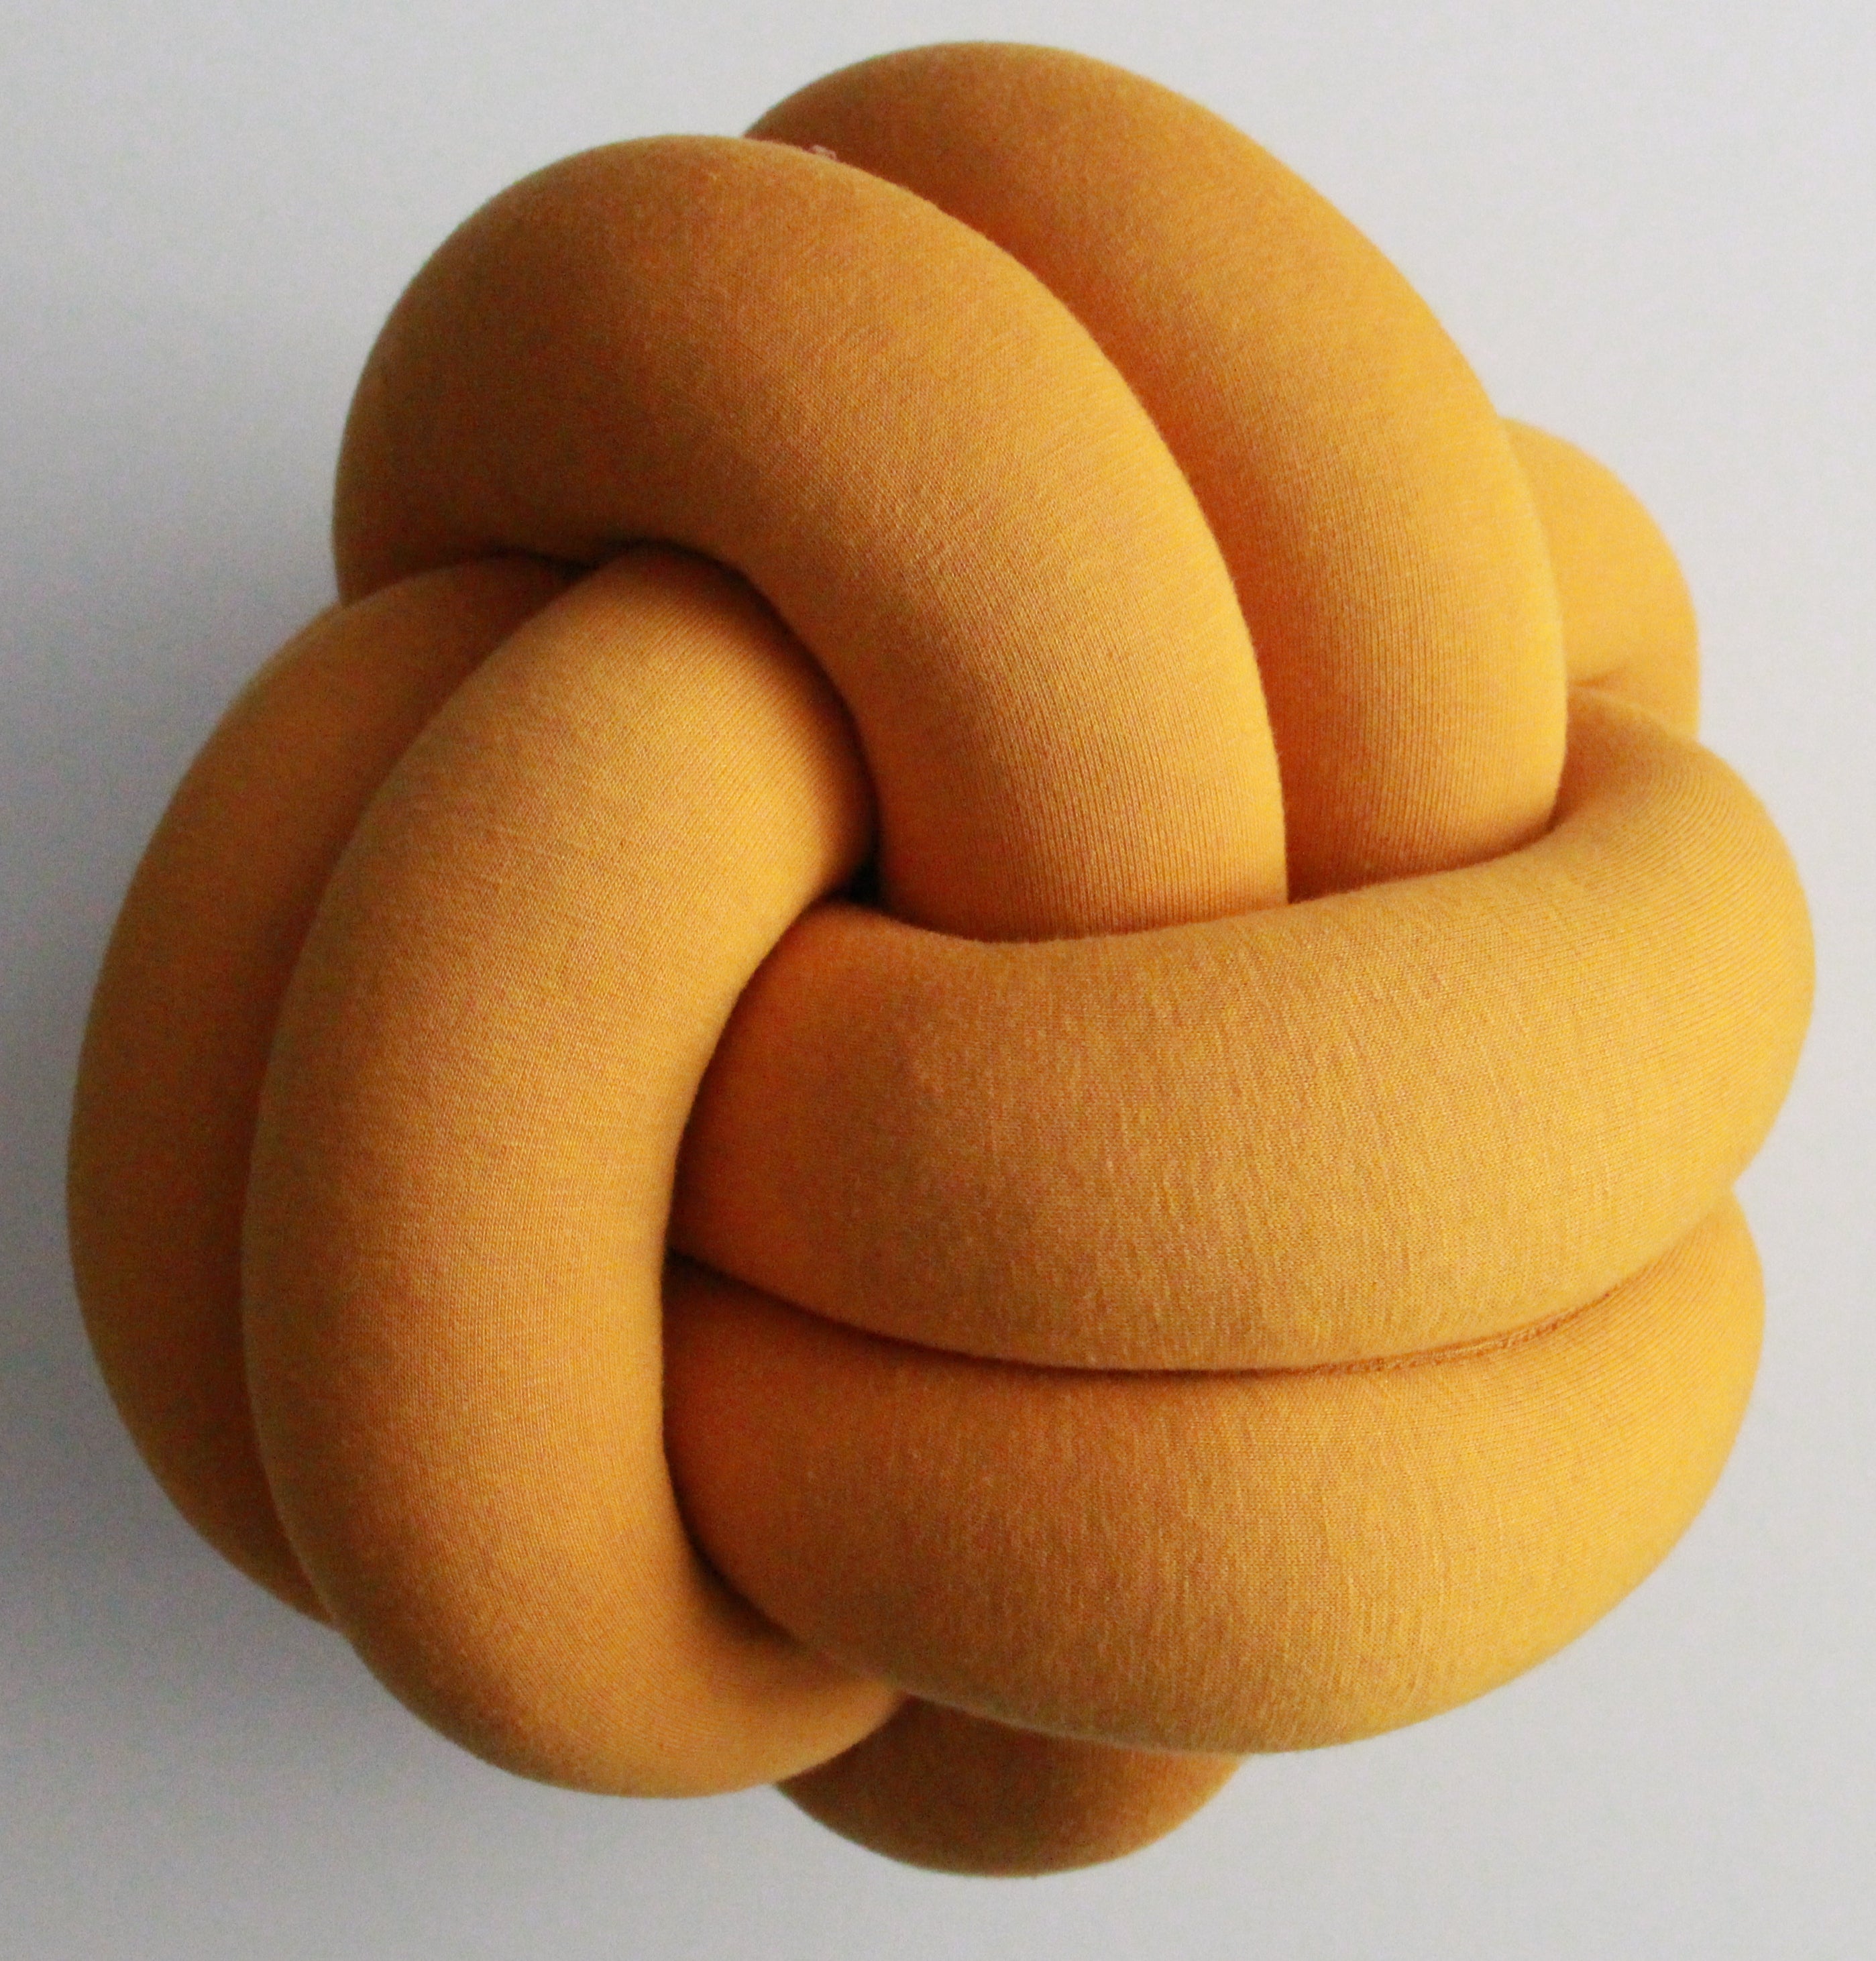 Medium Sphere Knot Pillow - See more Knot Pillows & Cushions at JujuAndJake.com